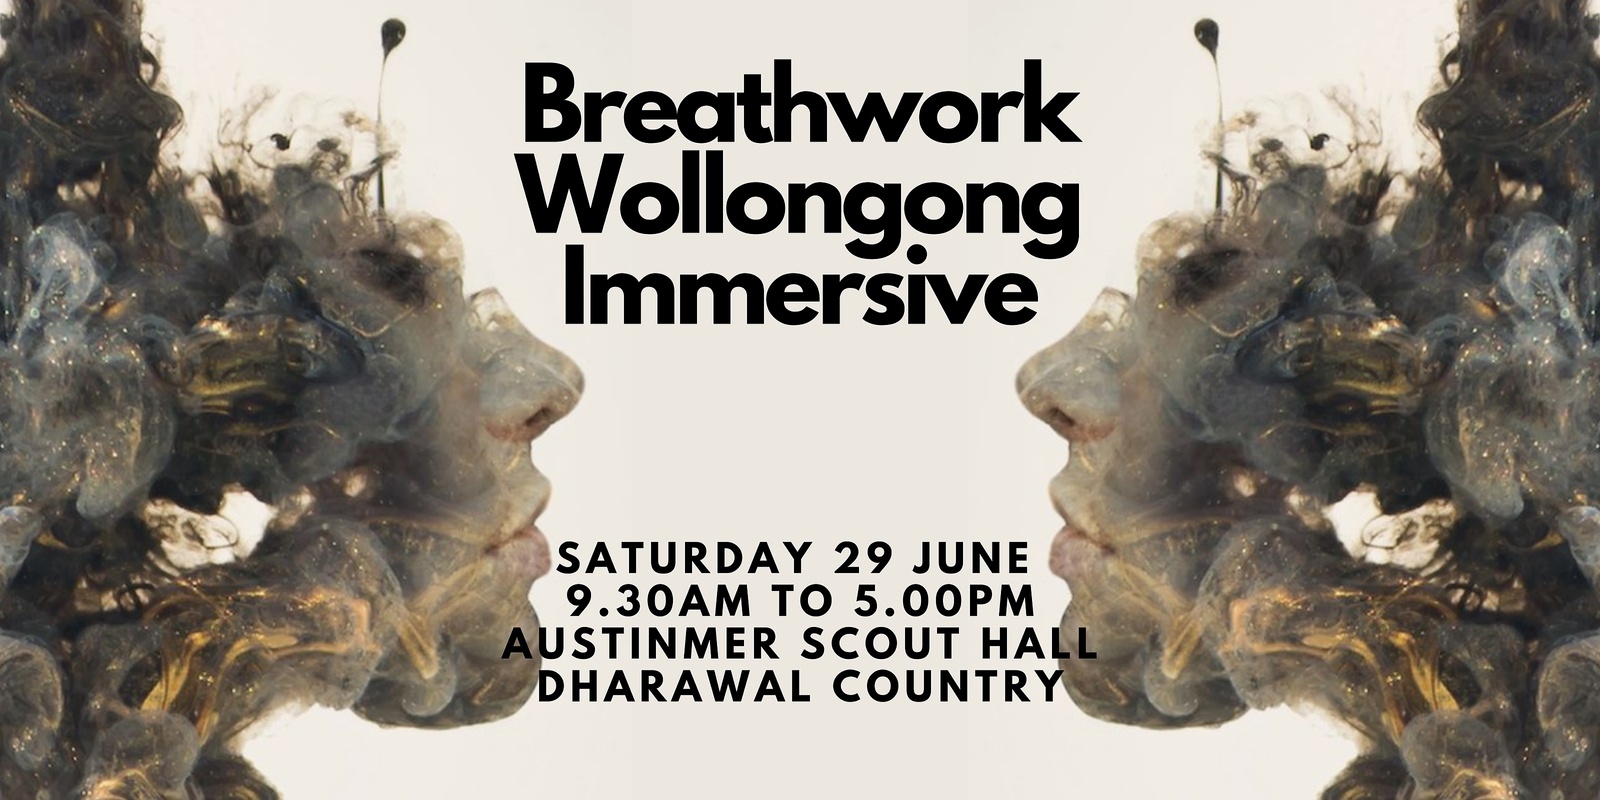 Banner image for Wollongong Breathwork Immersive 